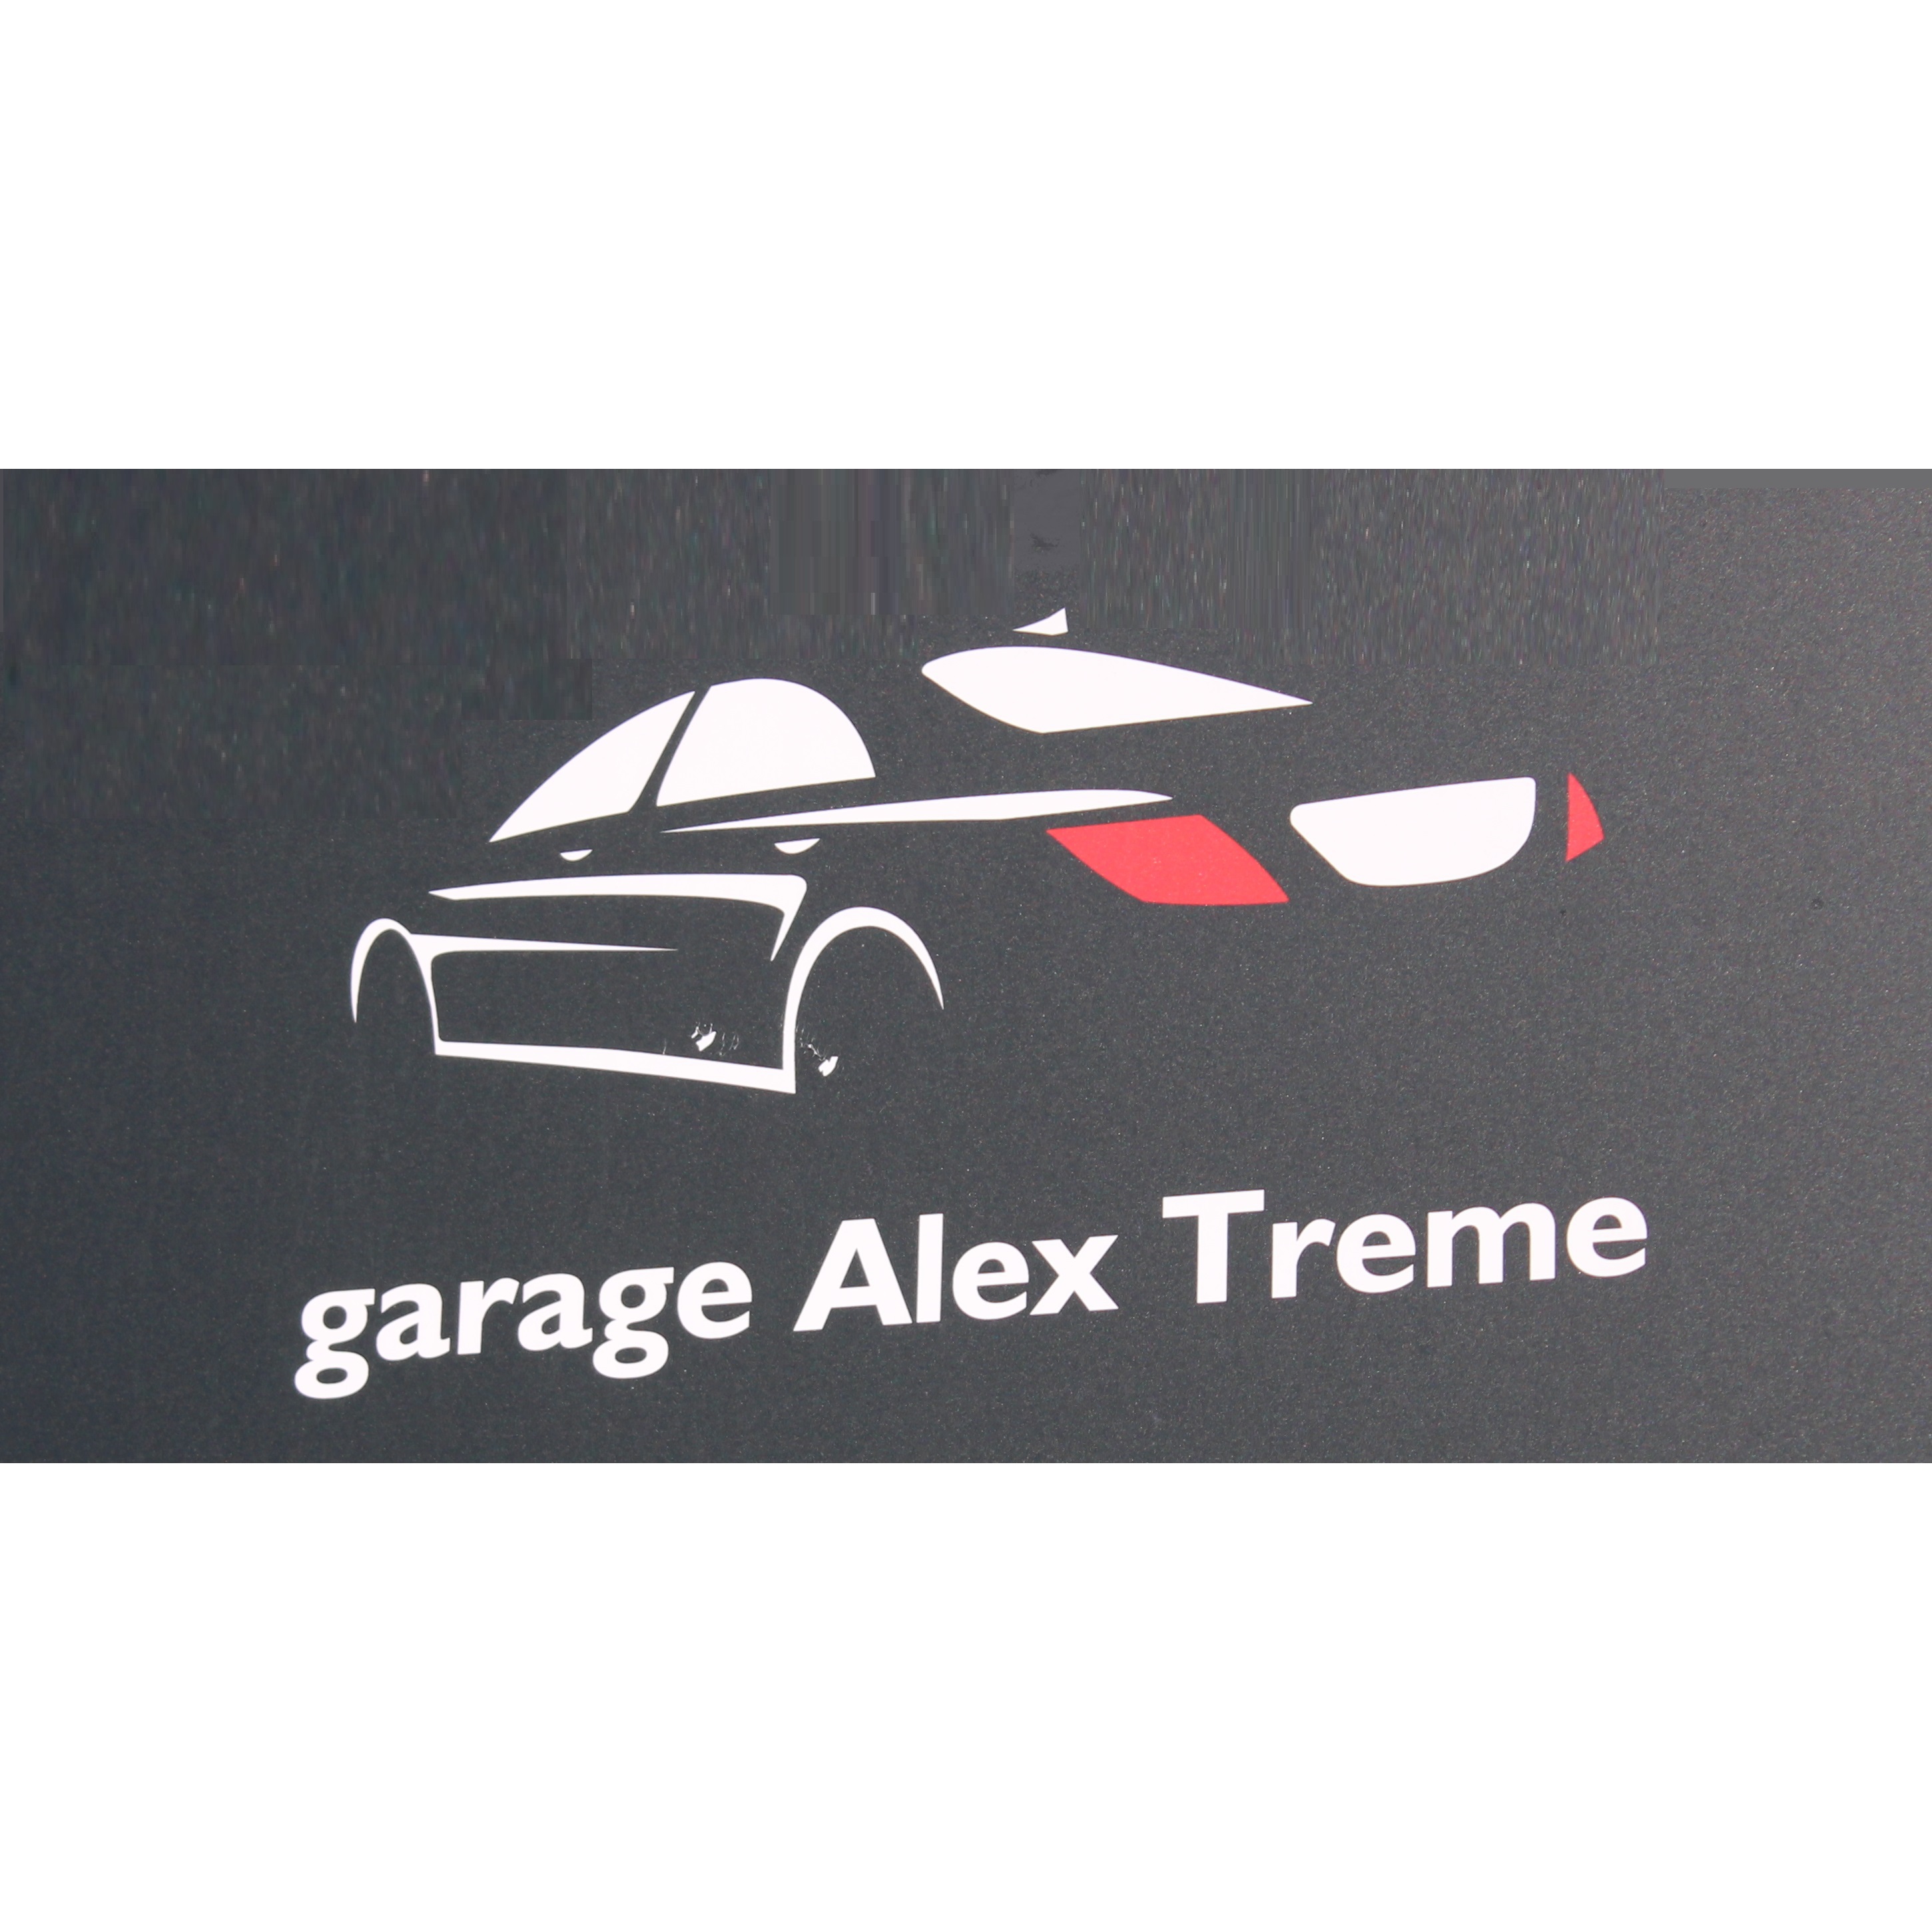 Alex Treme Auto Sàrl - Garage - Réparation voiture - Pneus Logo